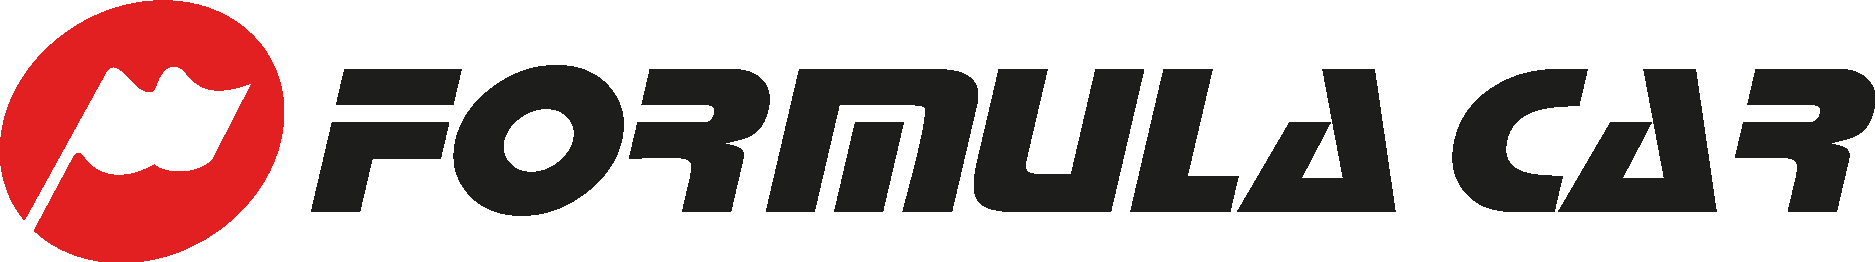 FIA Formula 1 World Championship Logo PNG Transparent & SVG Vector